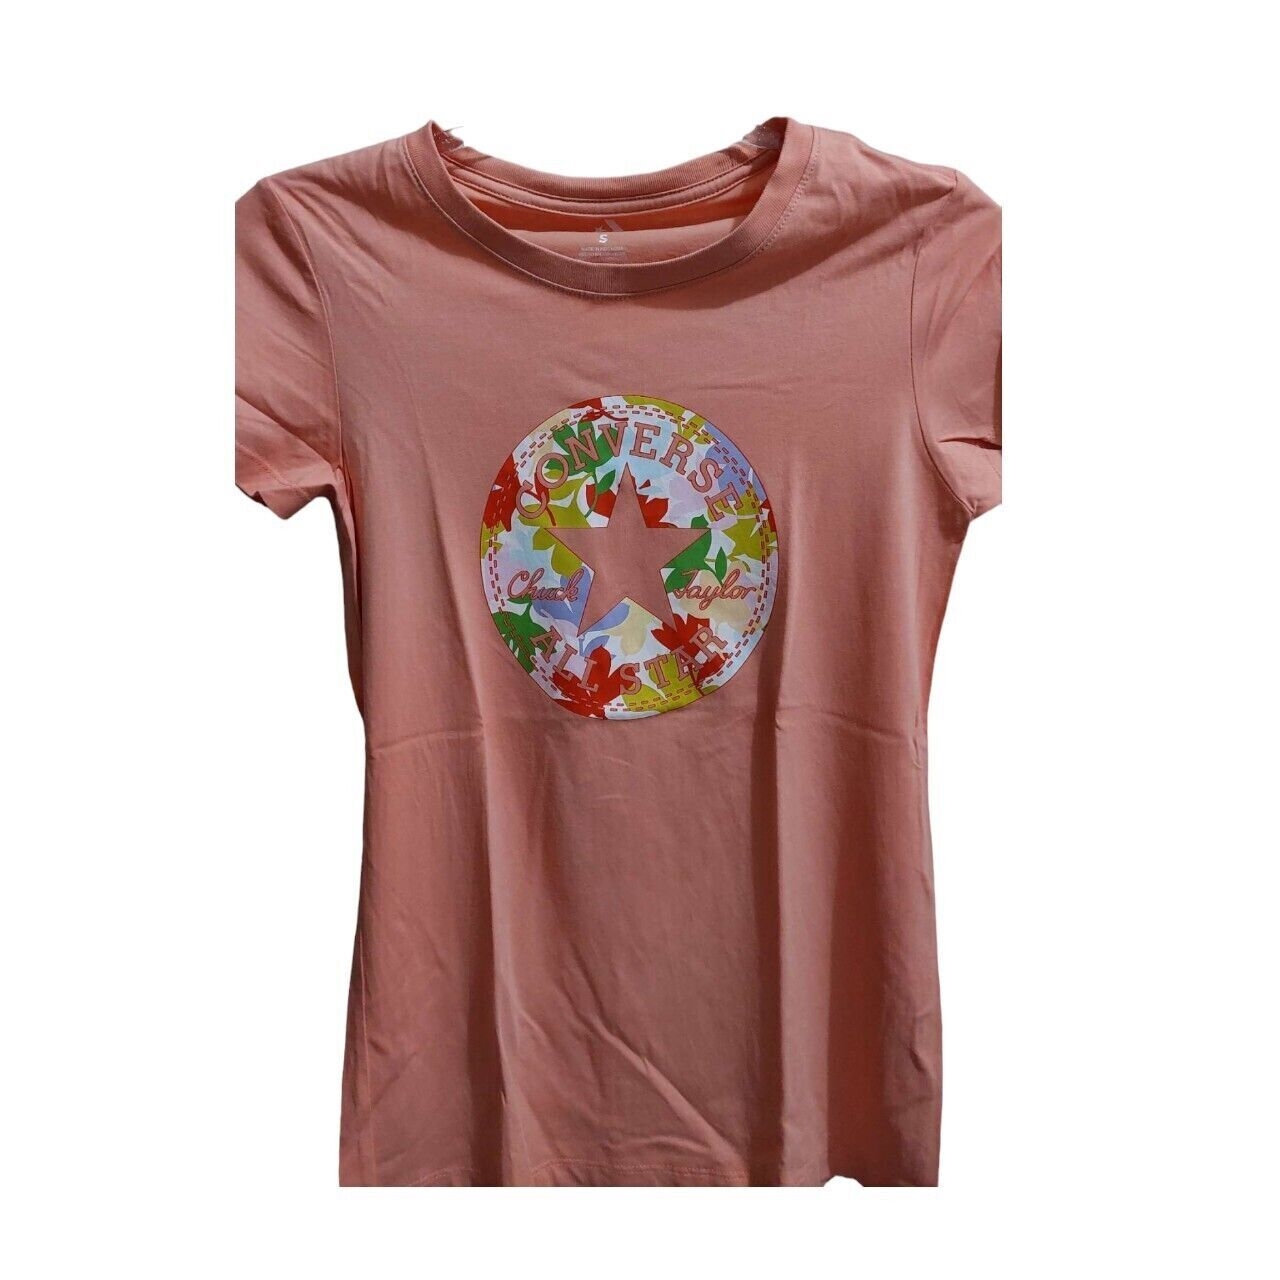 Converse Pink Coral T-Shirt